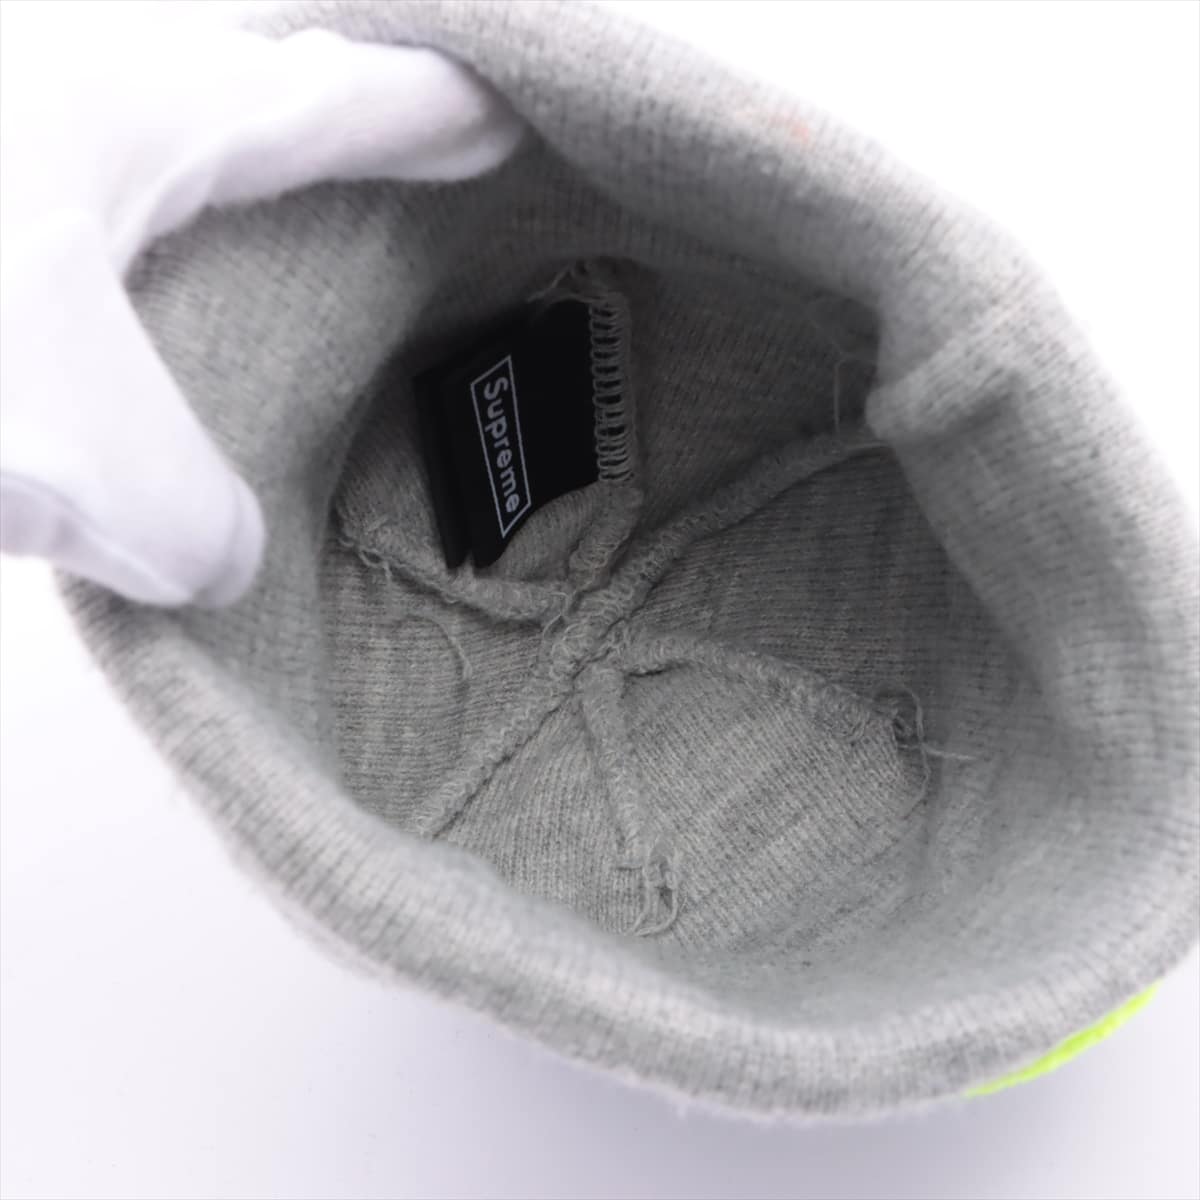 Supreme × New Era Knit cap Acrylic Grey